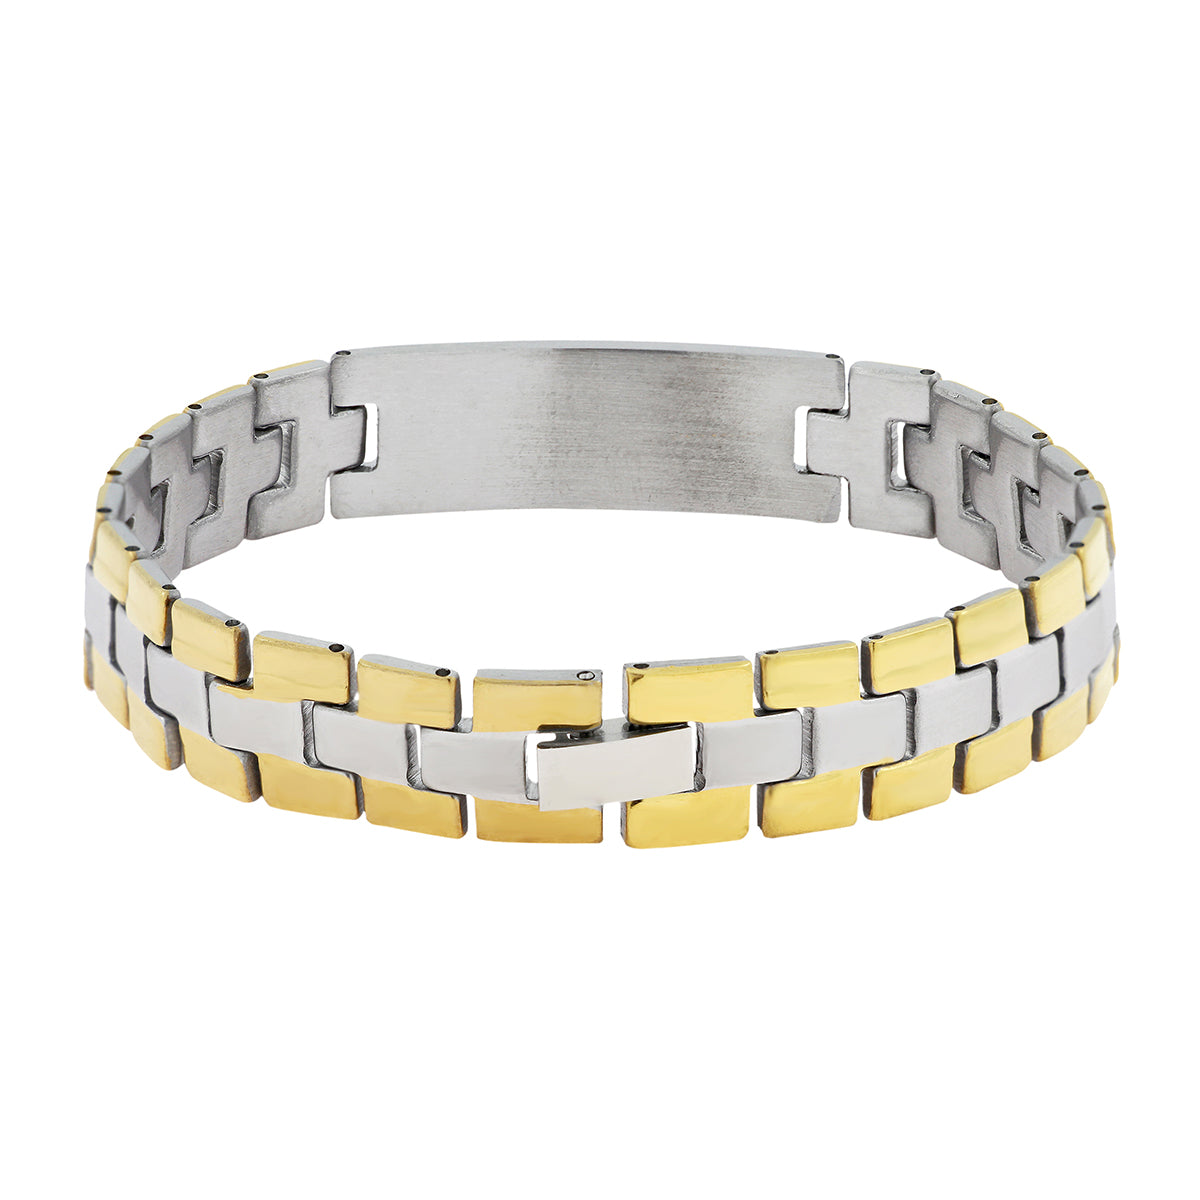 Get Your Hands on Custom 18k White Gold Bracelets | GLAMIRA.is